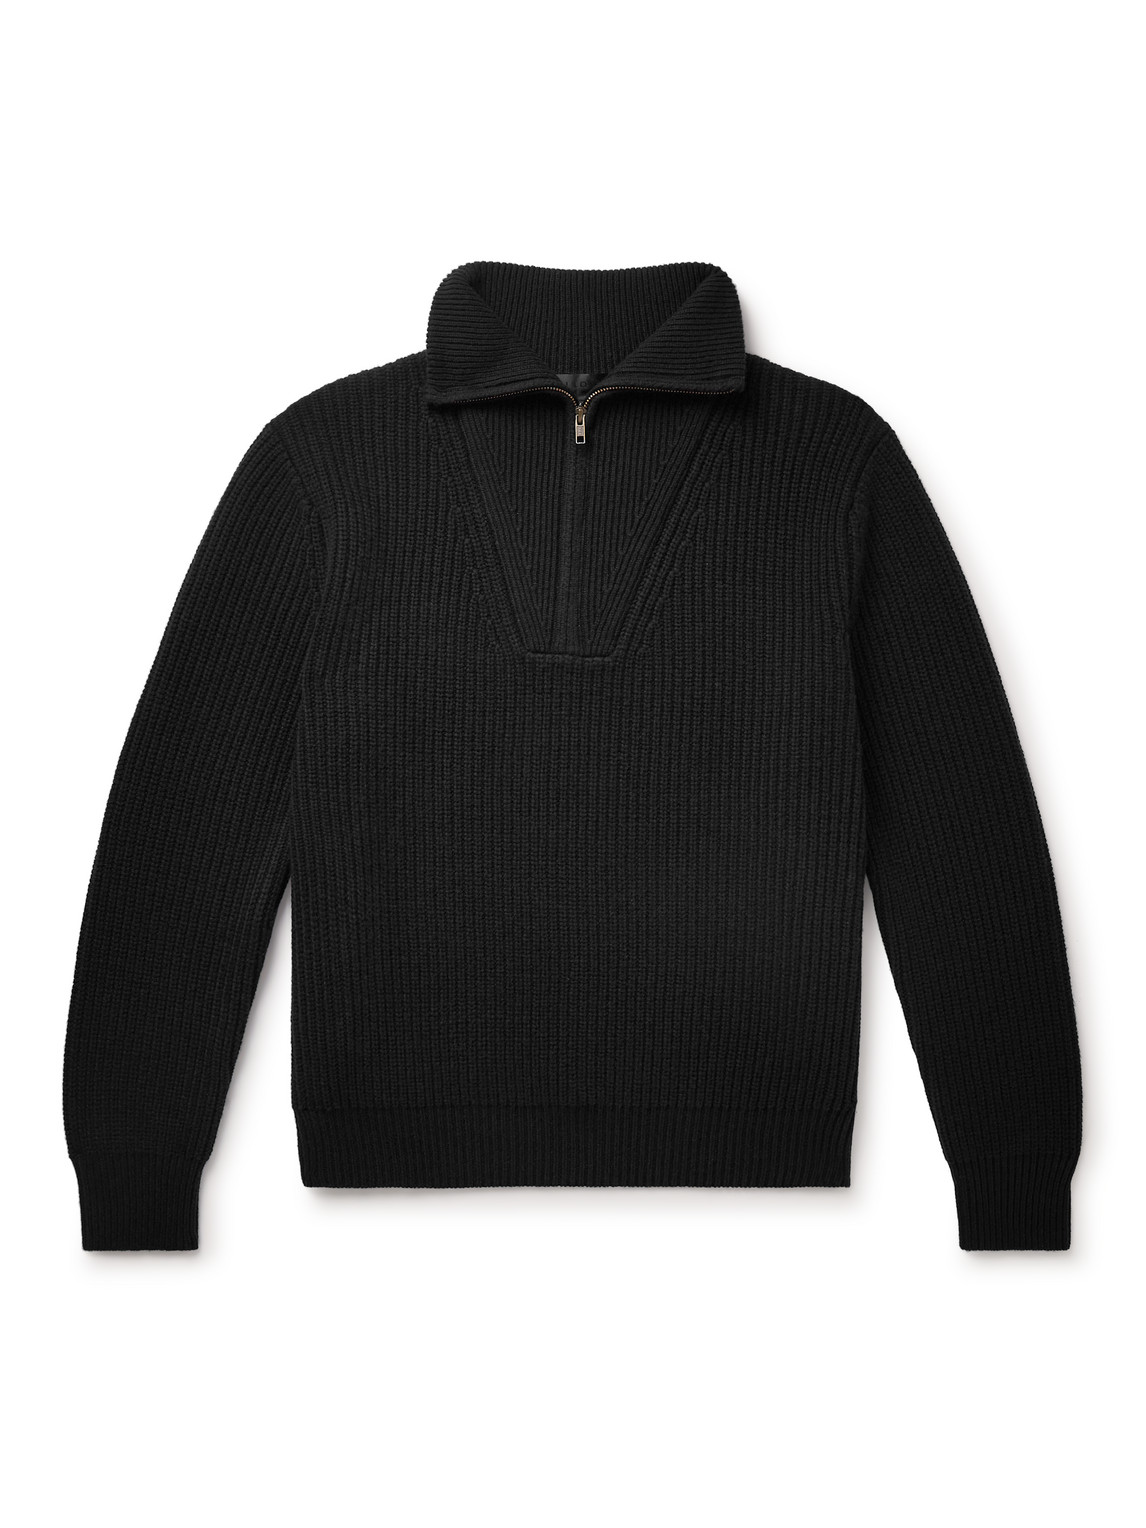 Nili Lotan - Heston Ribbed Cashmere Half-Zip Sweater - Men - Black - L von Nili Lotan